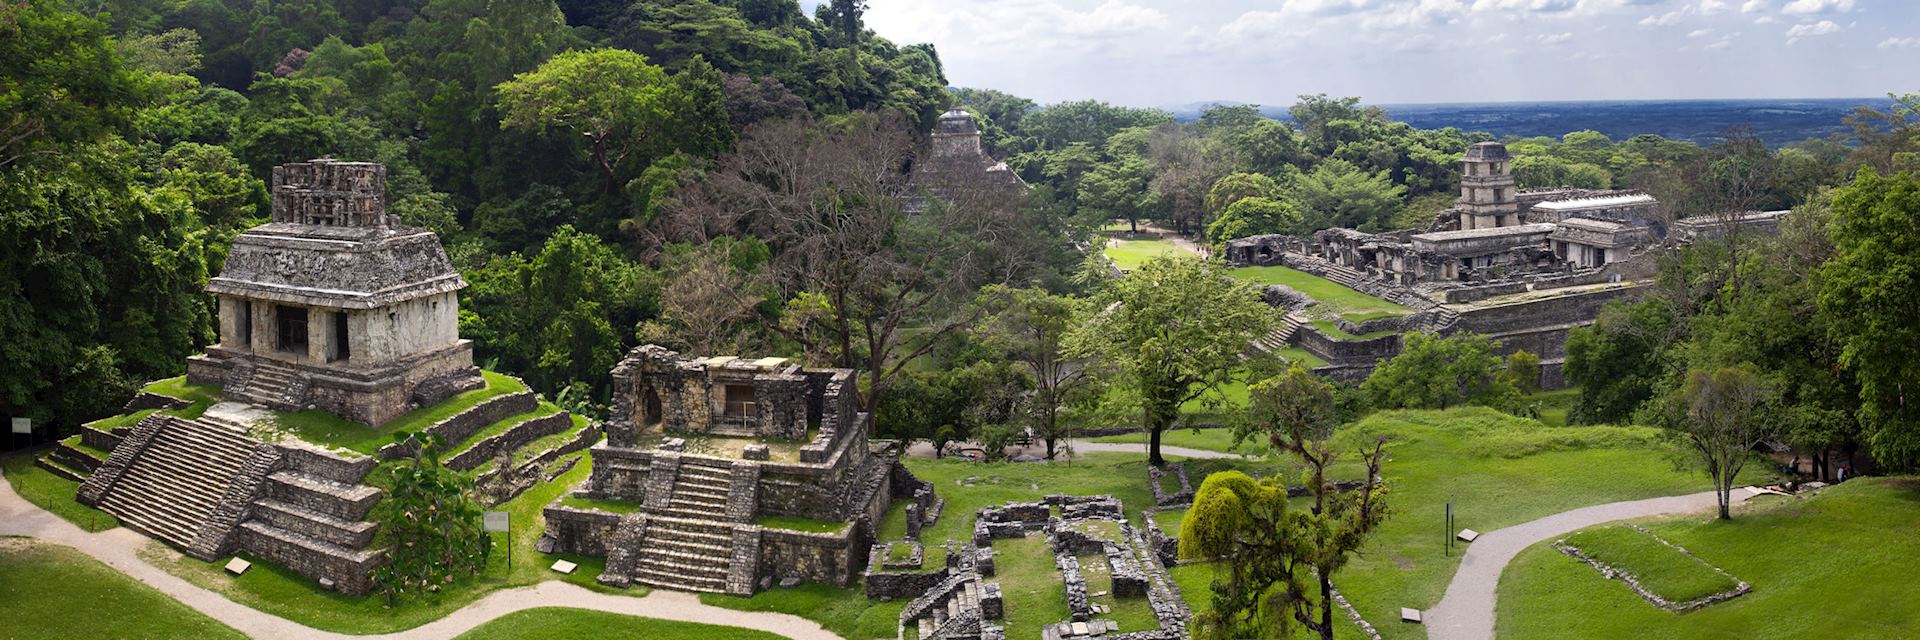 Maya ruins in Palenque